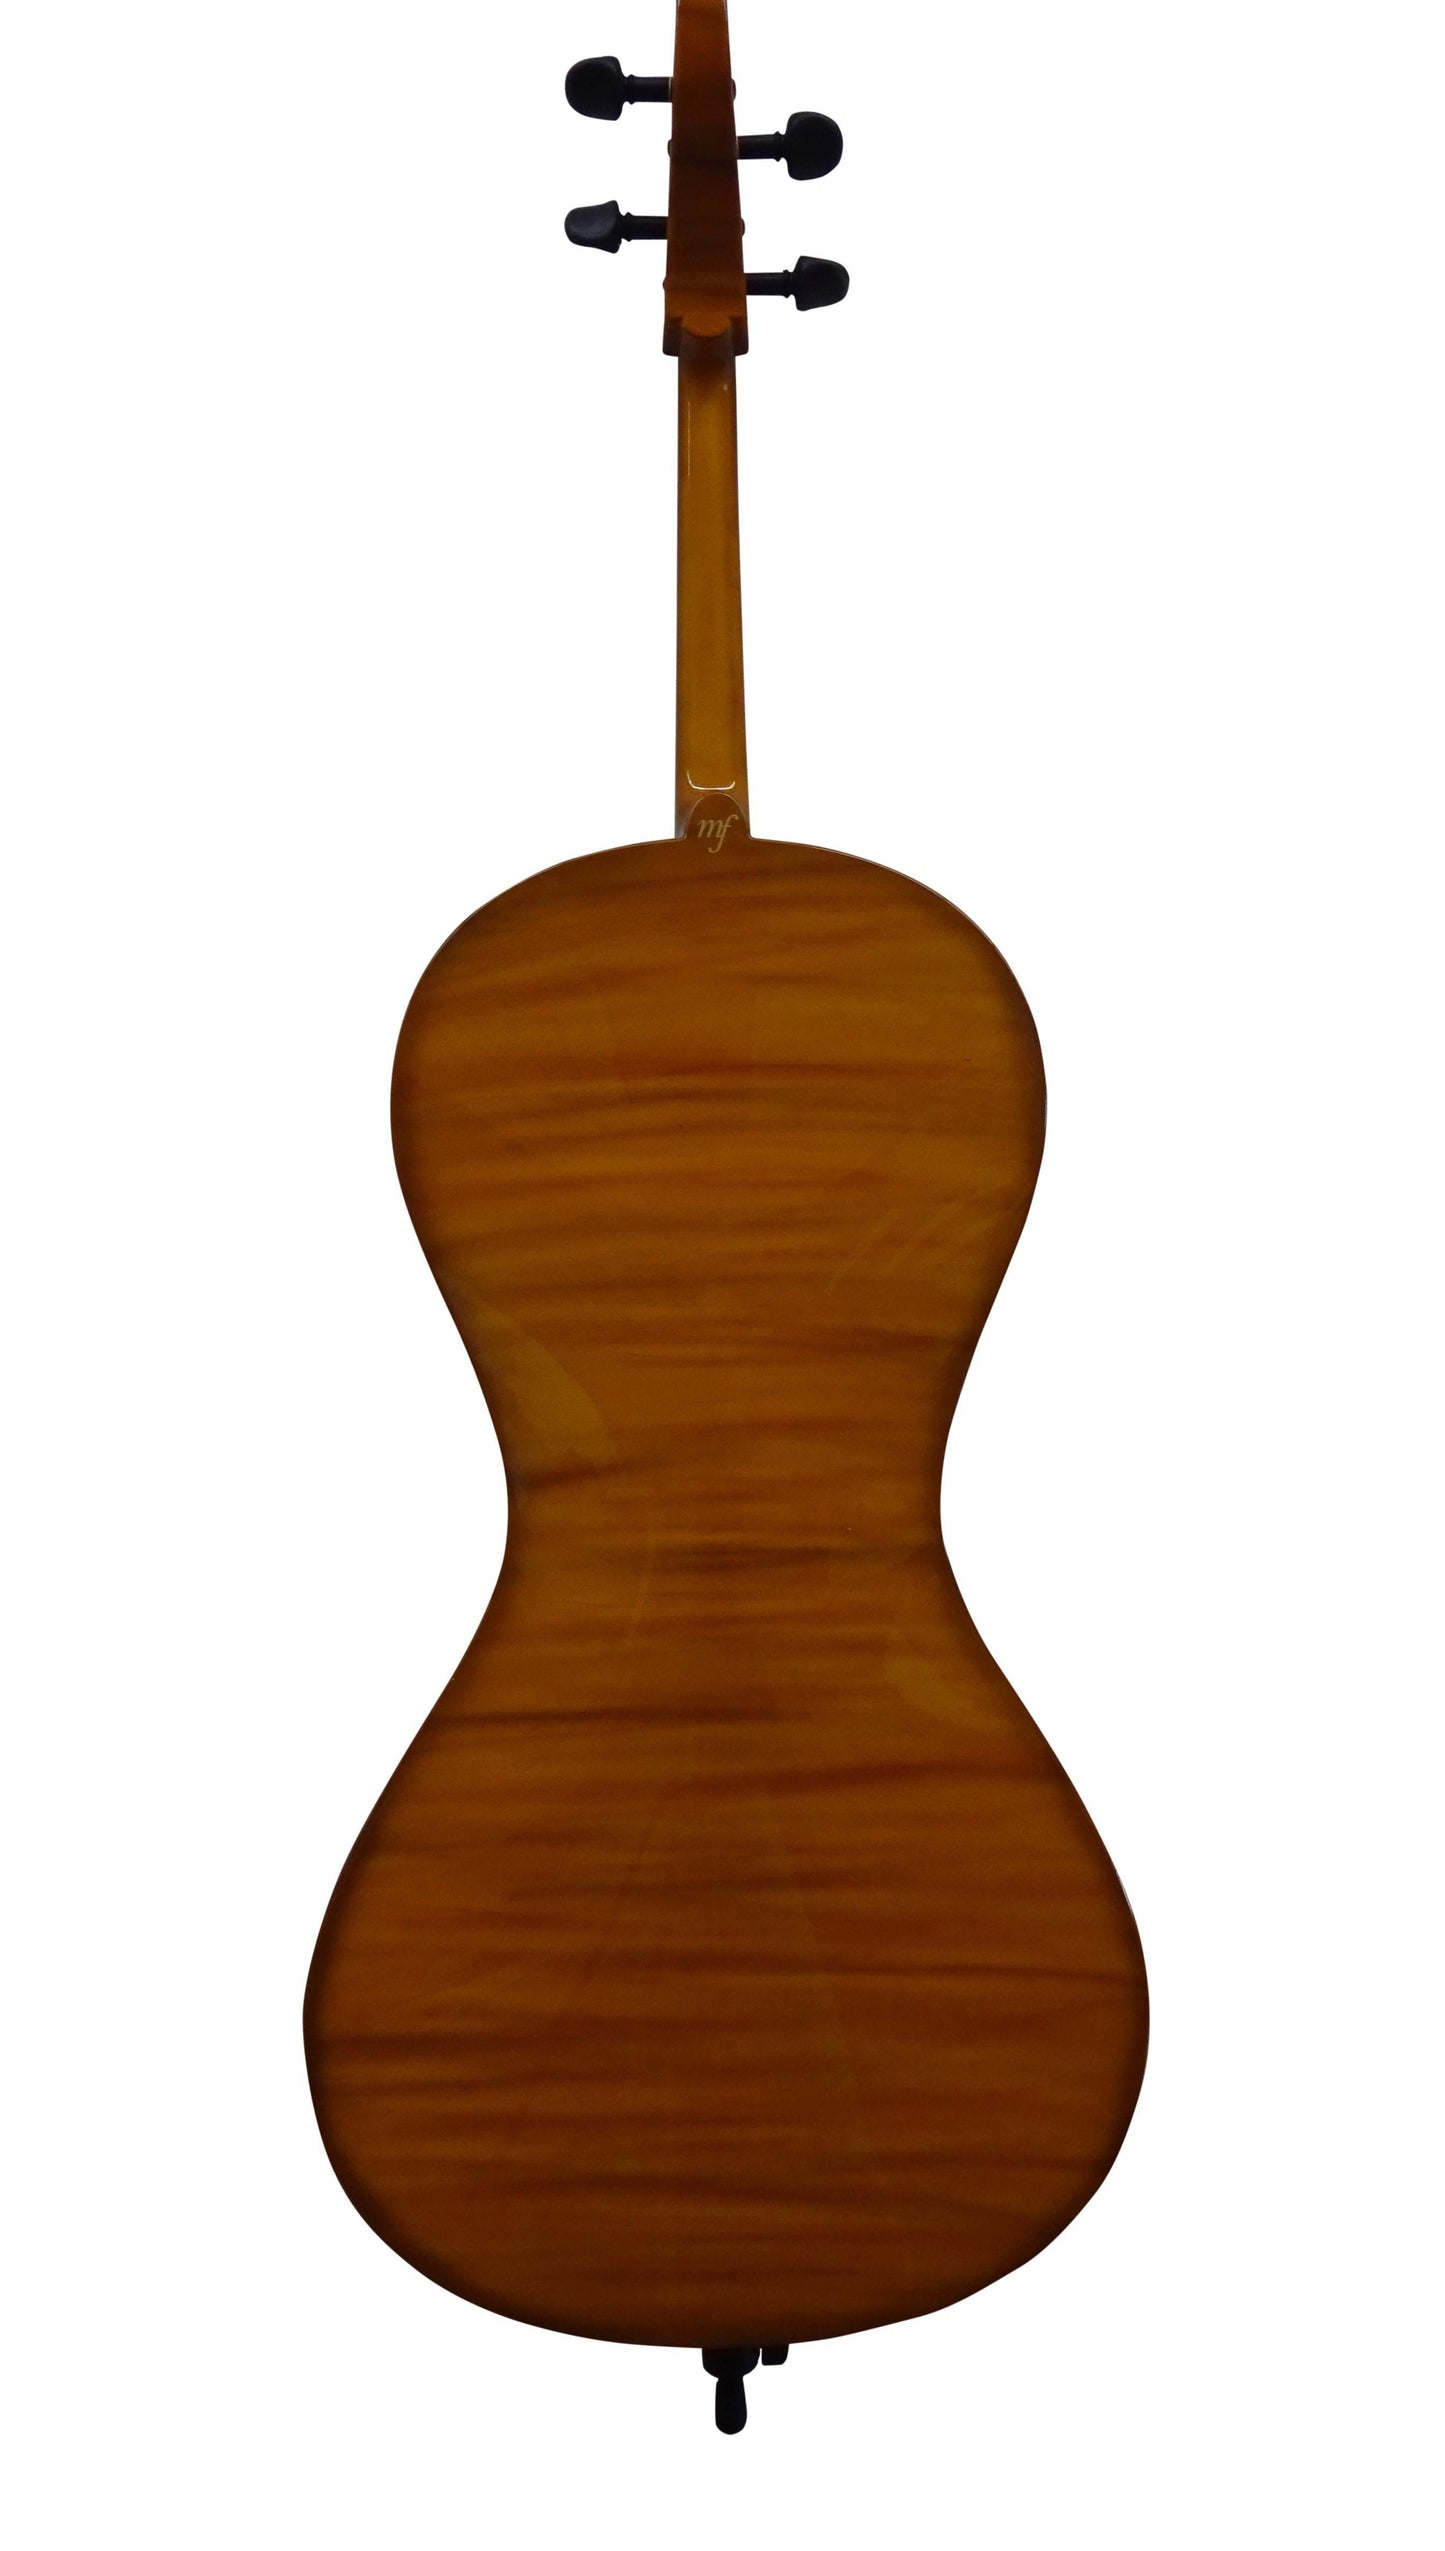 Carbon Fiber cello "OrchestraLine" available for immediate shipment, 5% discount